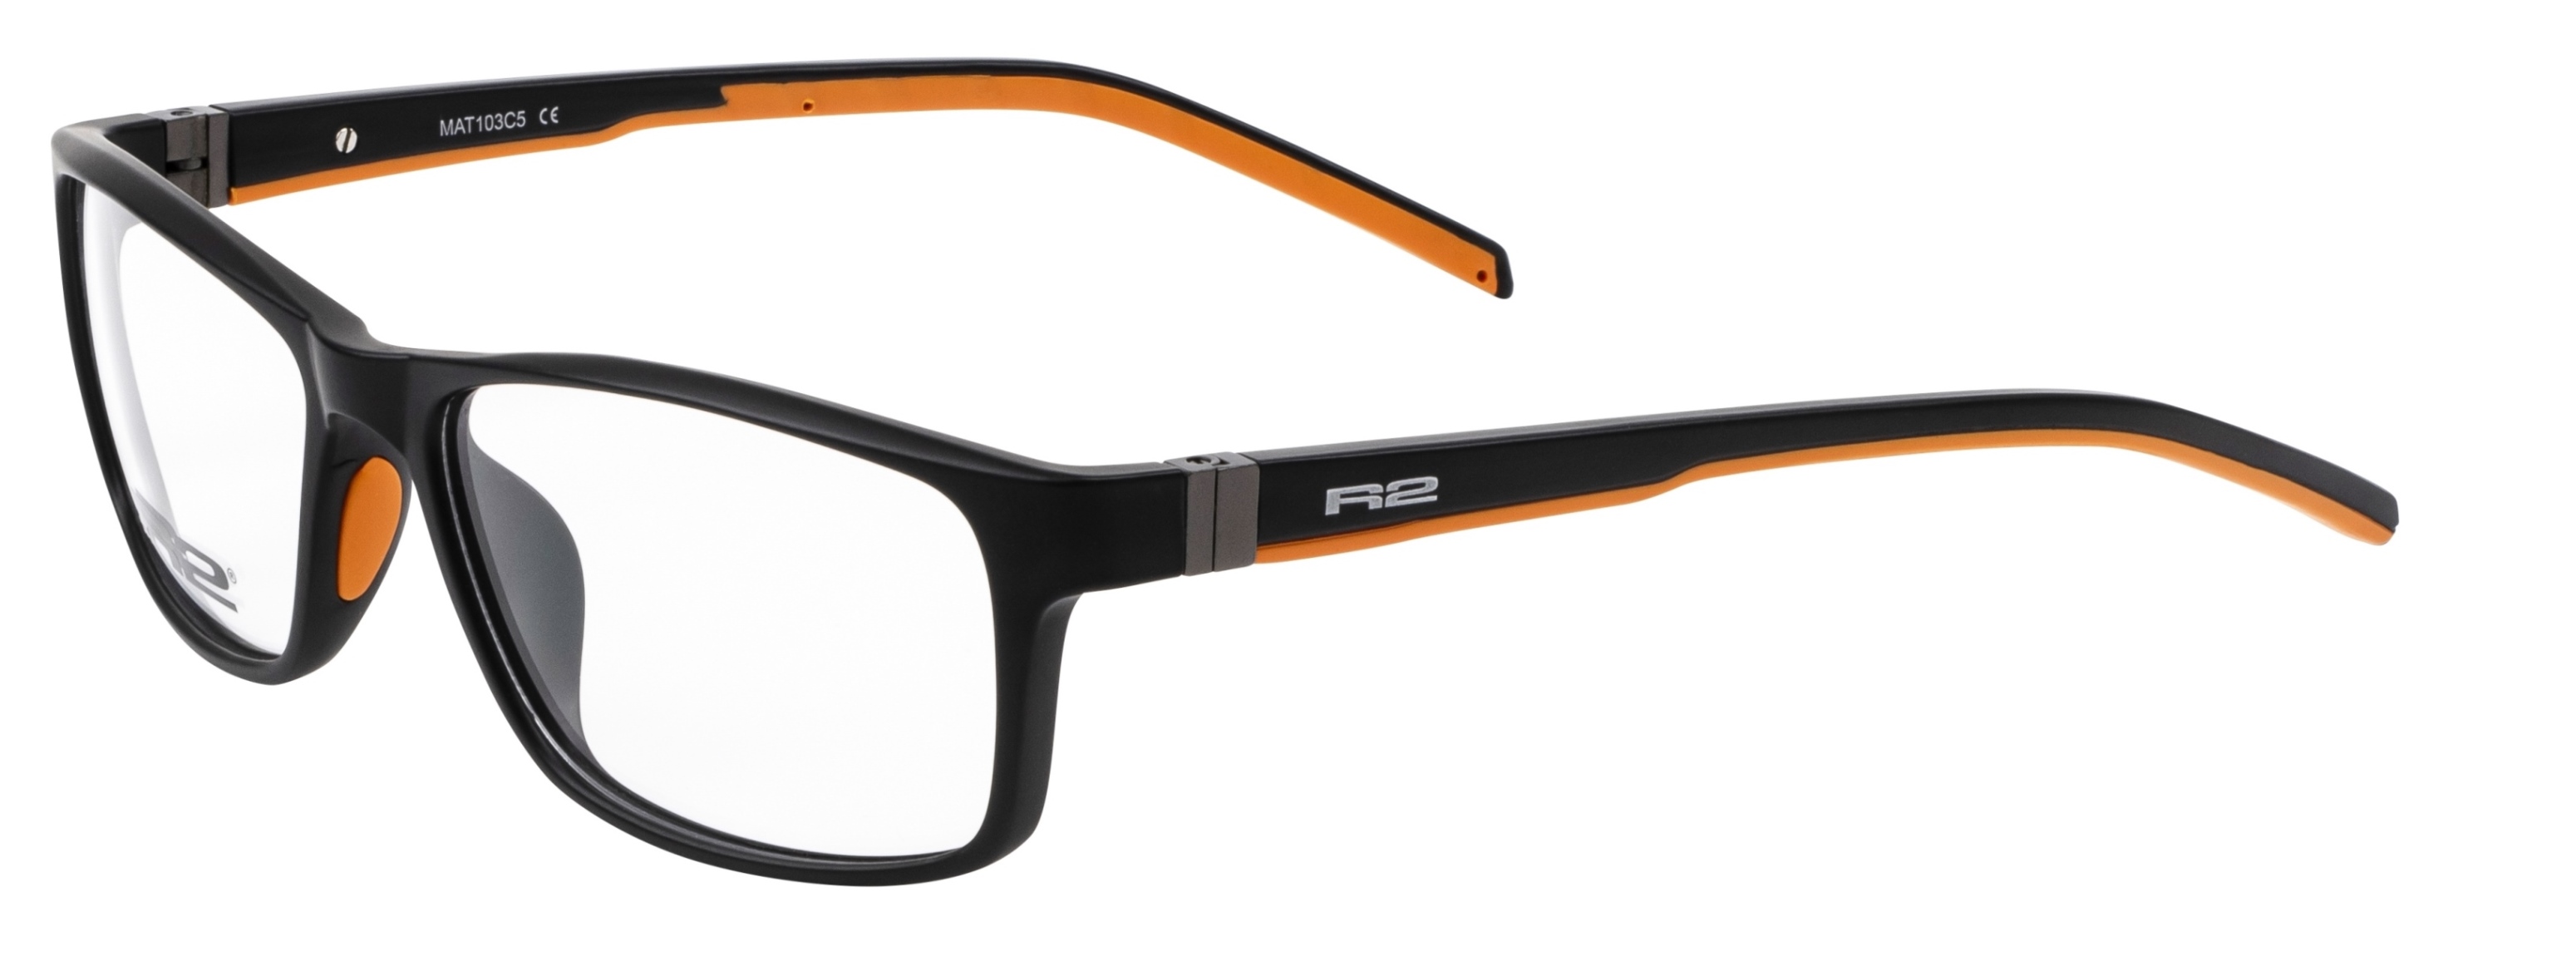 Sportovní dioptrické brýle R2 CLERIC MAT103C5